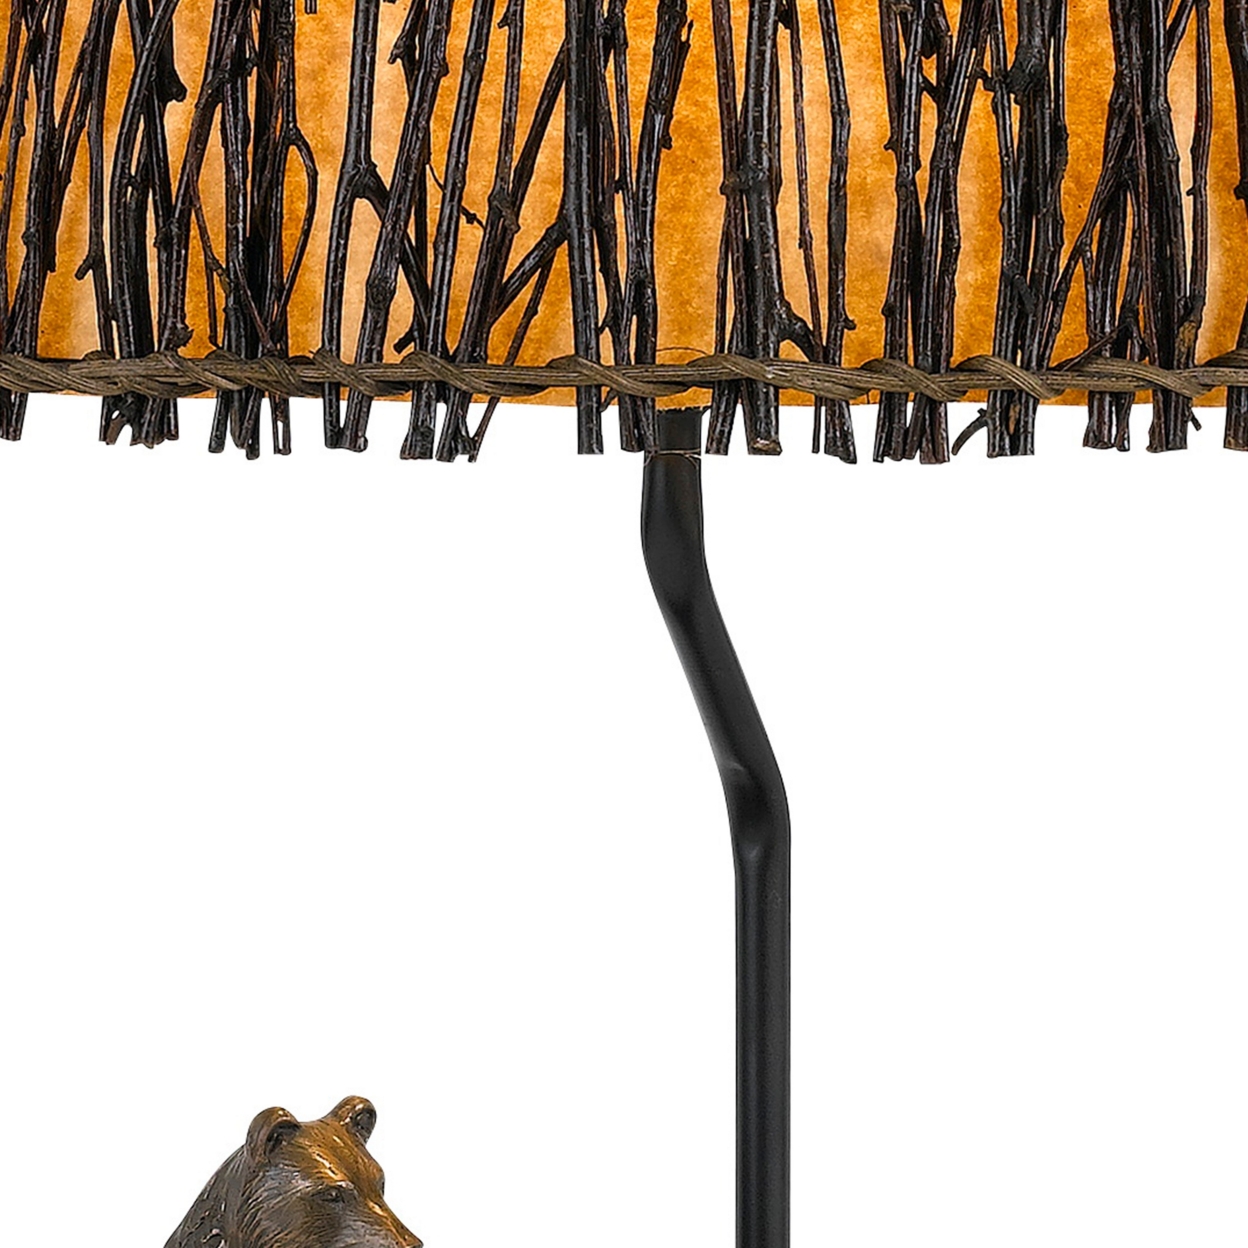 150W 3 Way Bear Canoe Table Lamp With Oval Wicker Shade, Antique Bronze- Saltoro Sherpi